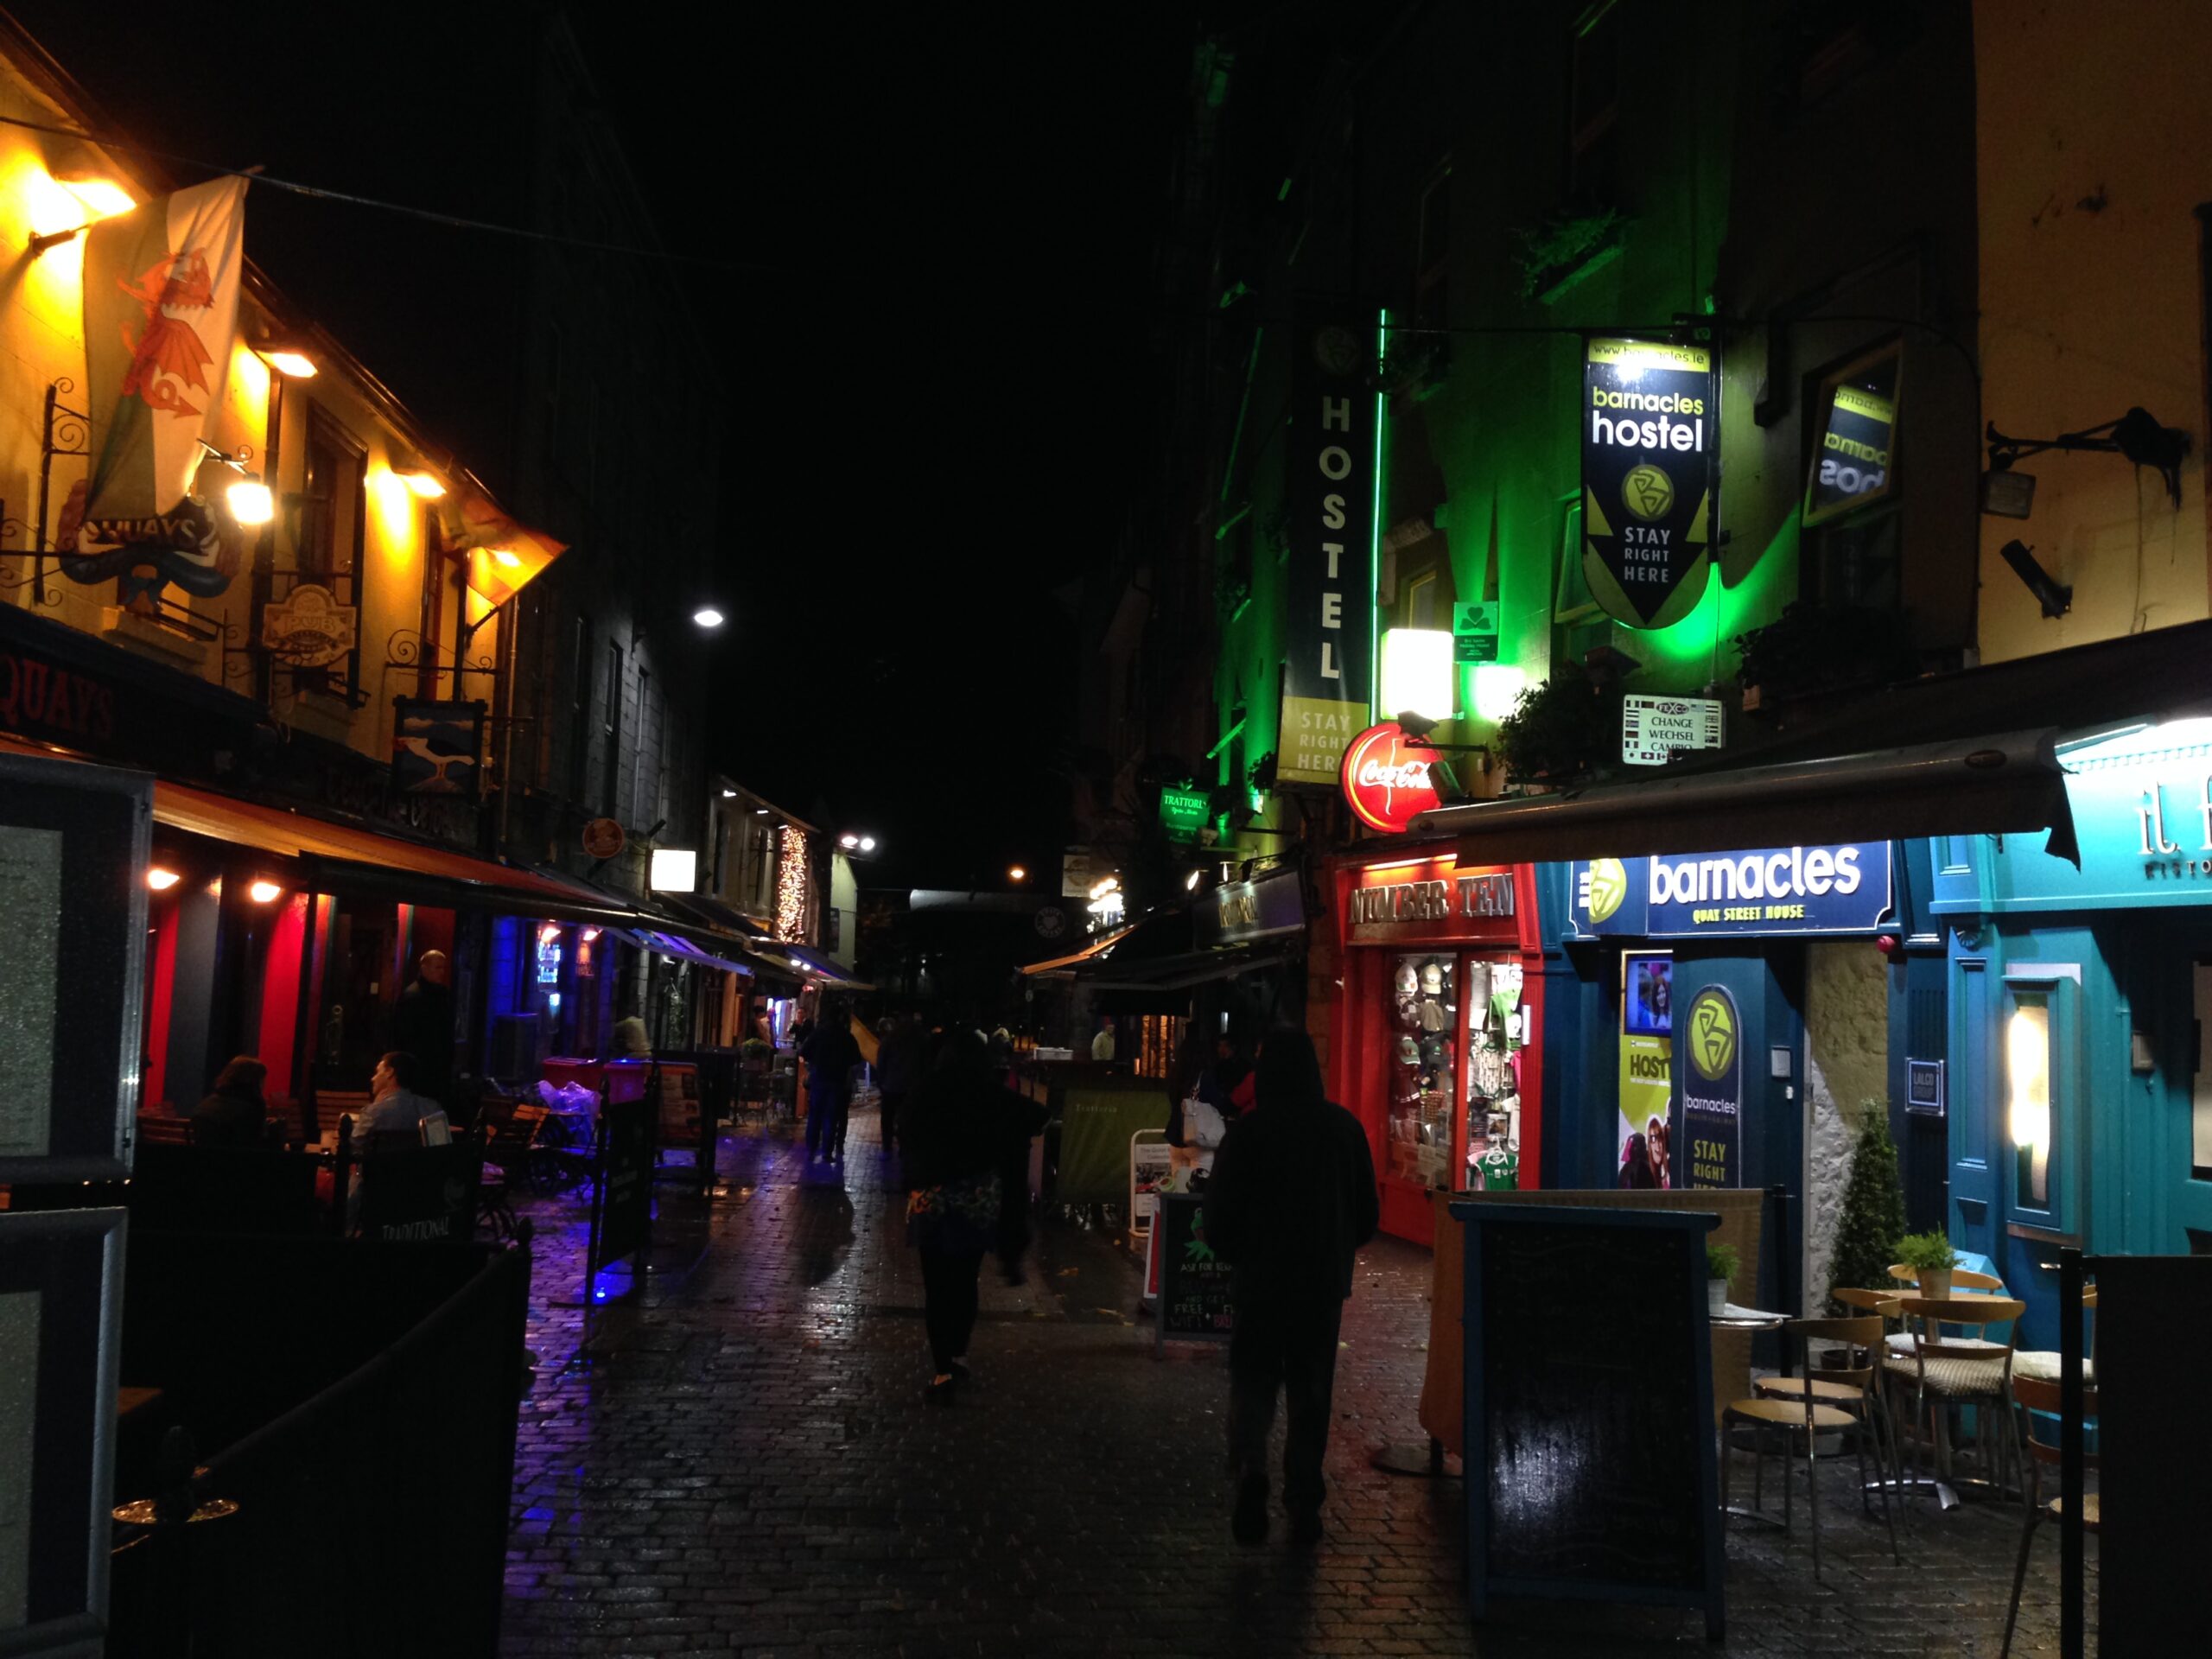 Galway, Ireland at night